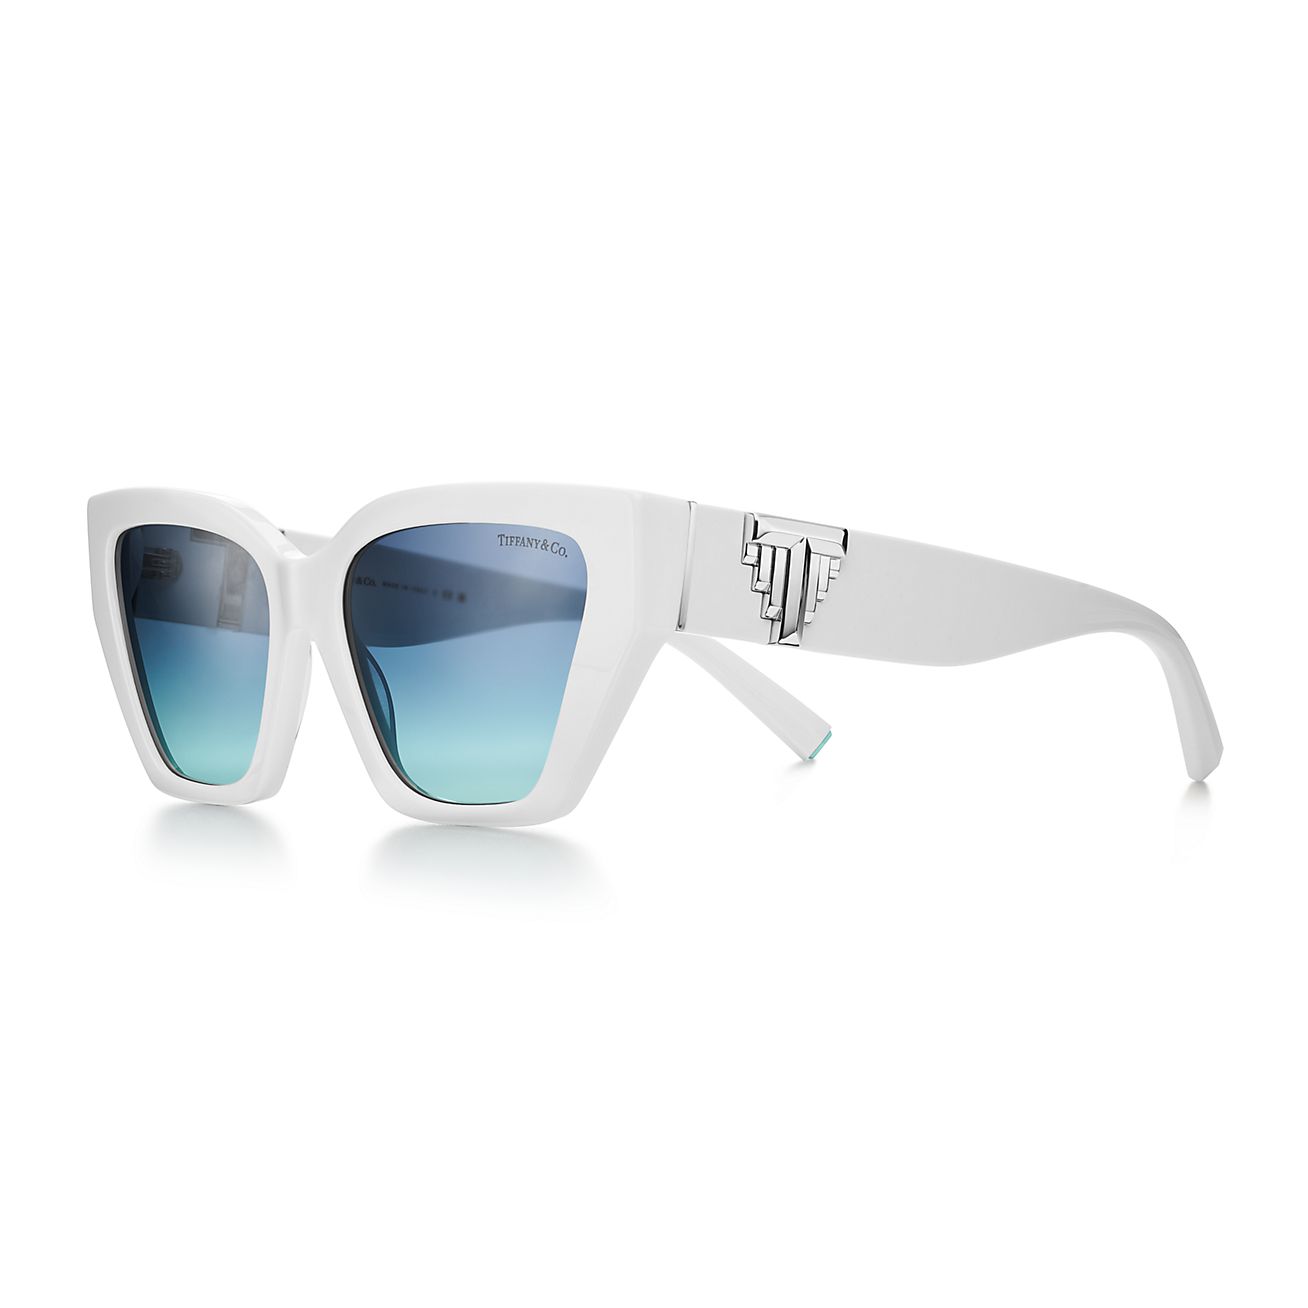 Tiffany T Deco Sunglasses in White Acetate and Tiffany Blue Gradient Lenses  | Tiffany & Co.